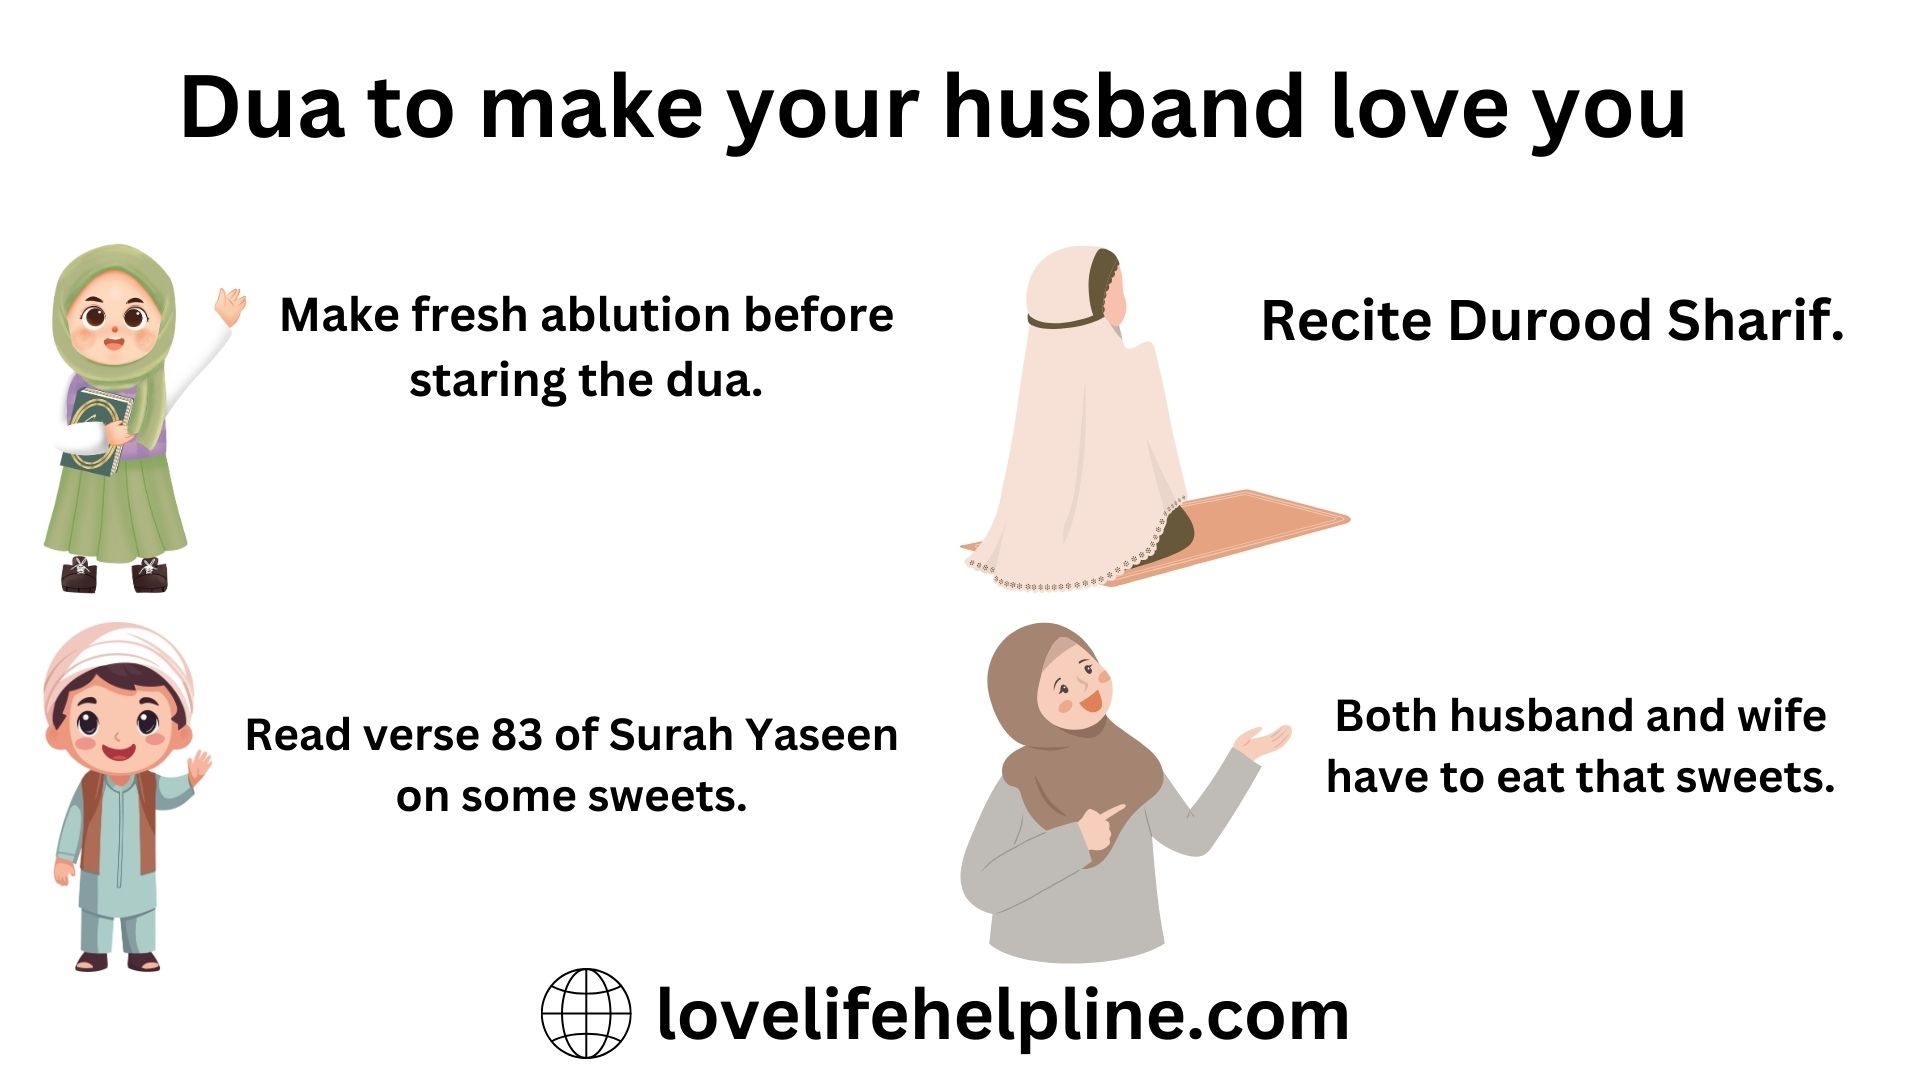 Dua to Make Your Husband Love You